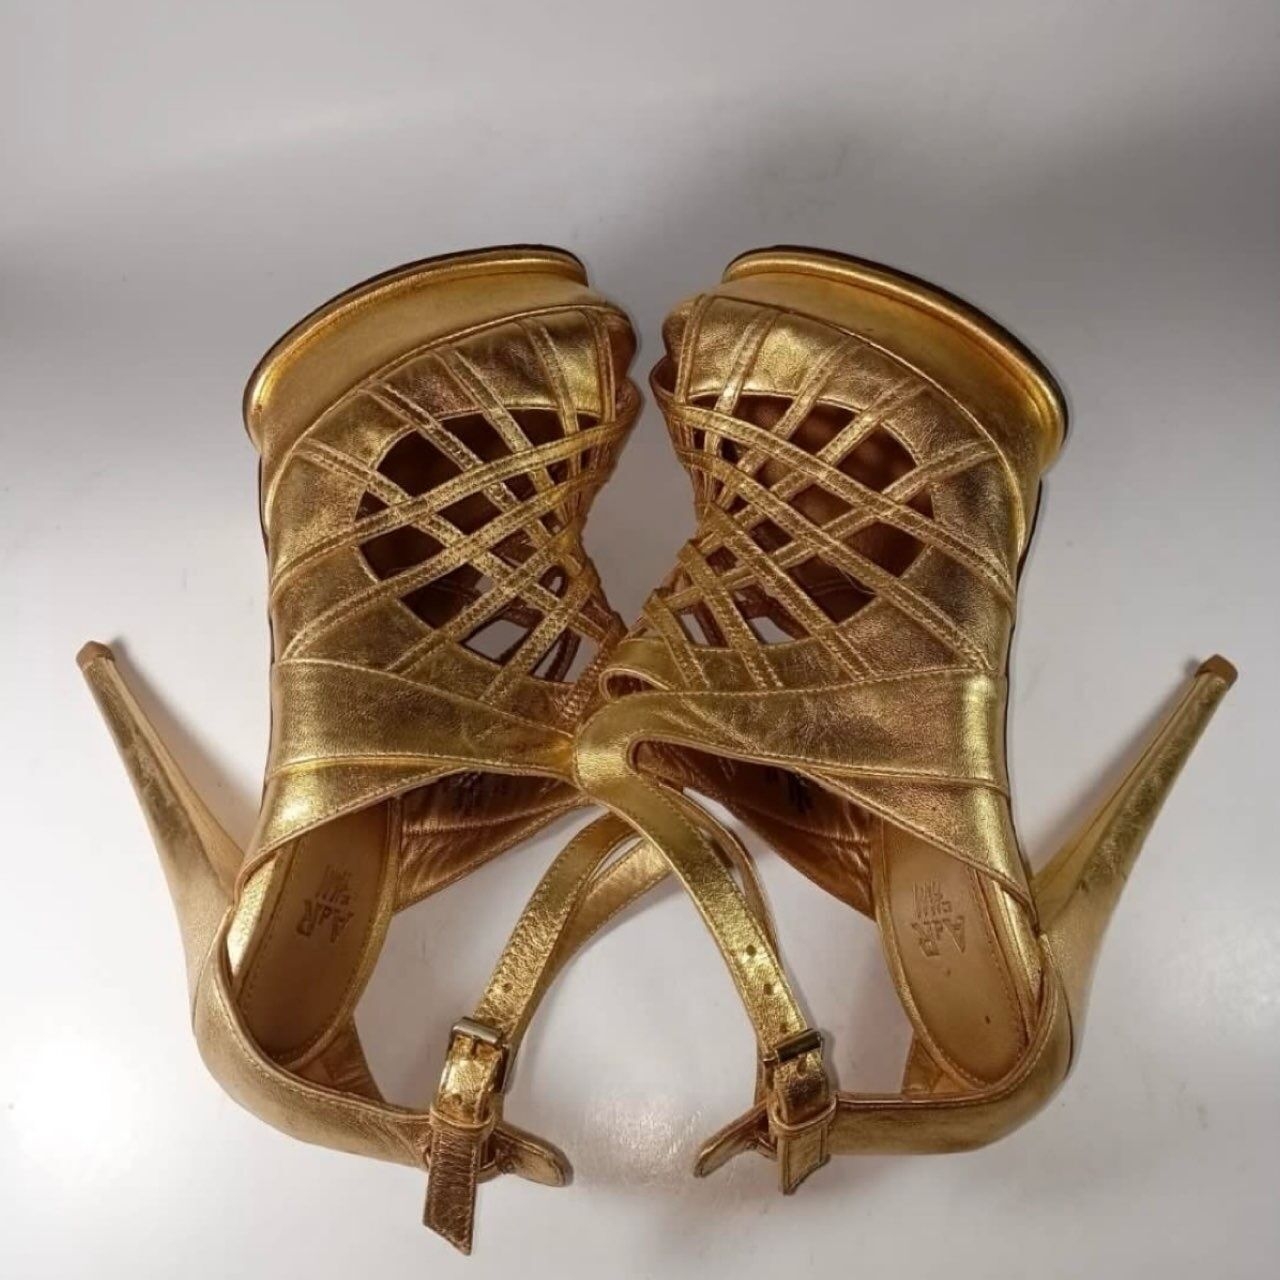 H&M Gold Heels